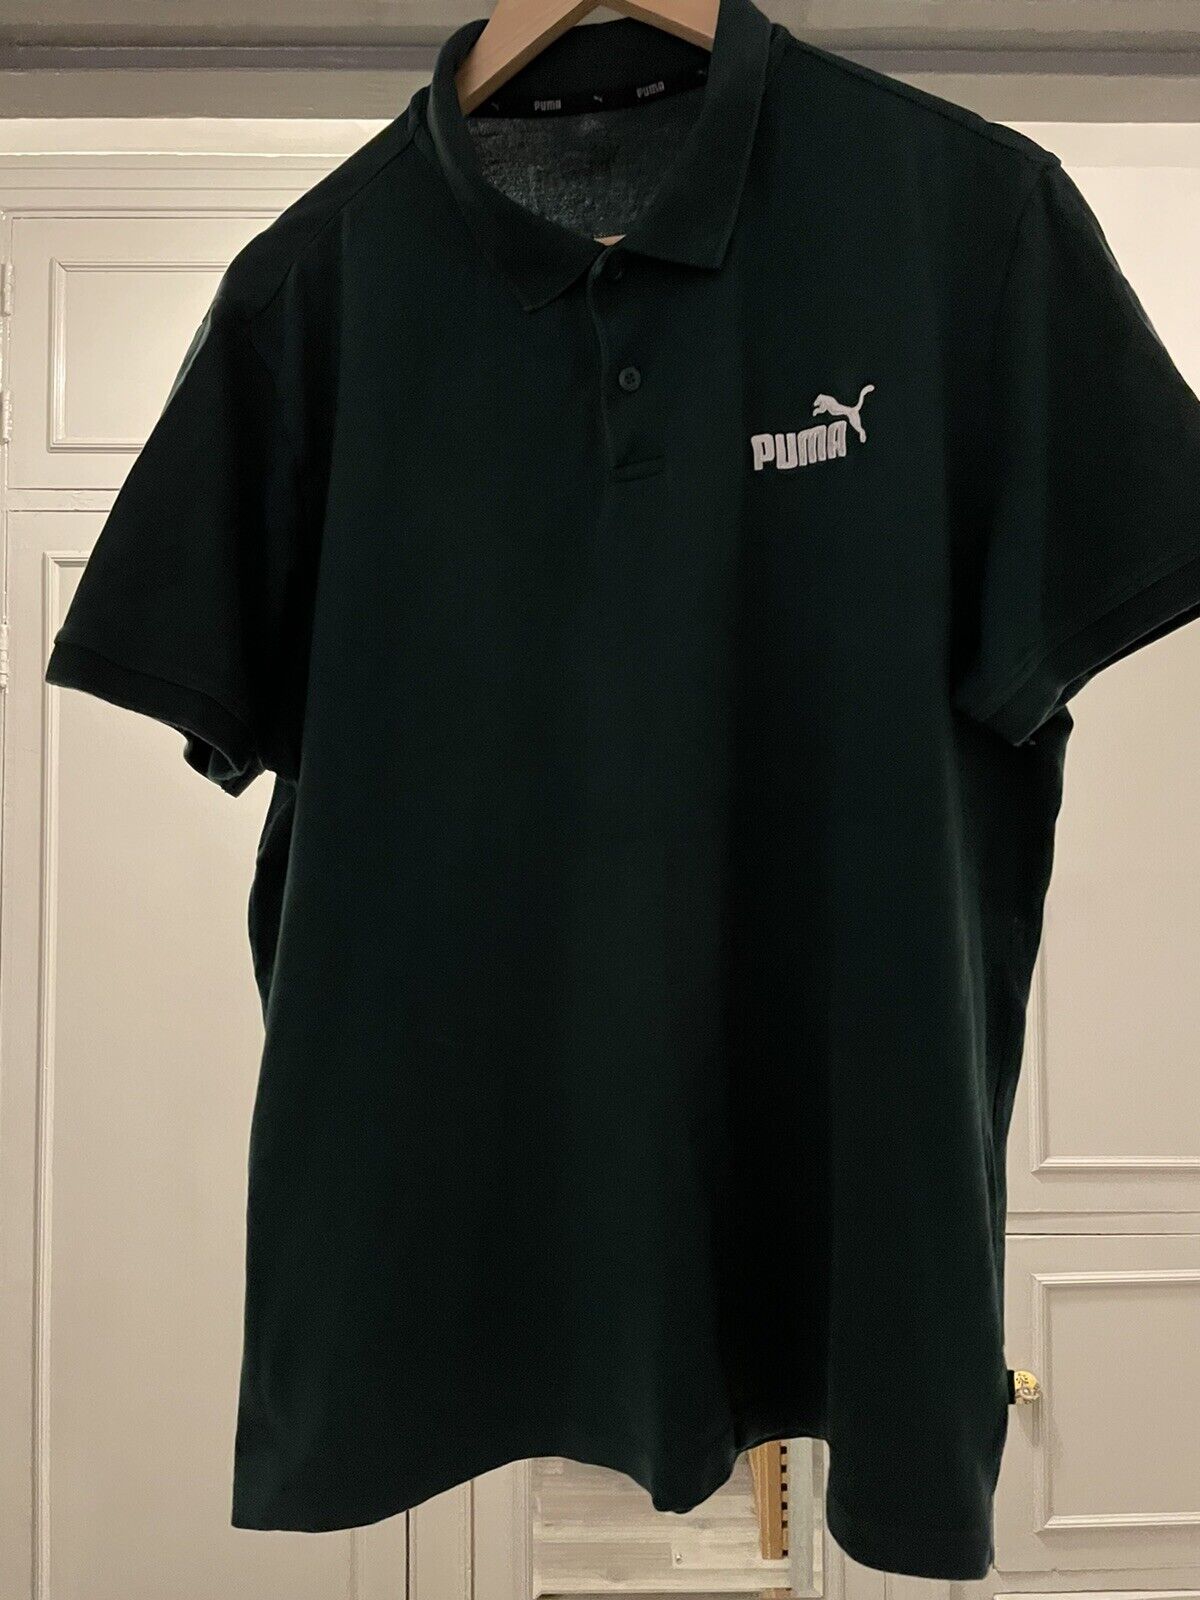 Men's Green Puma Polo Cotton T-Shirt Size Xl | eBay